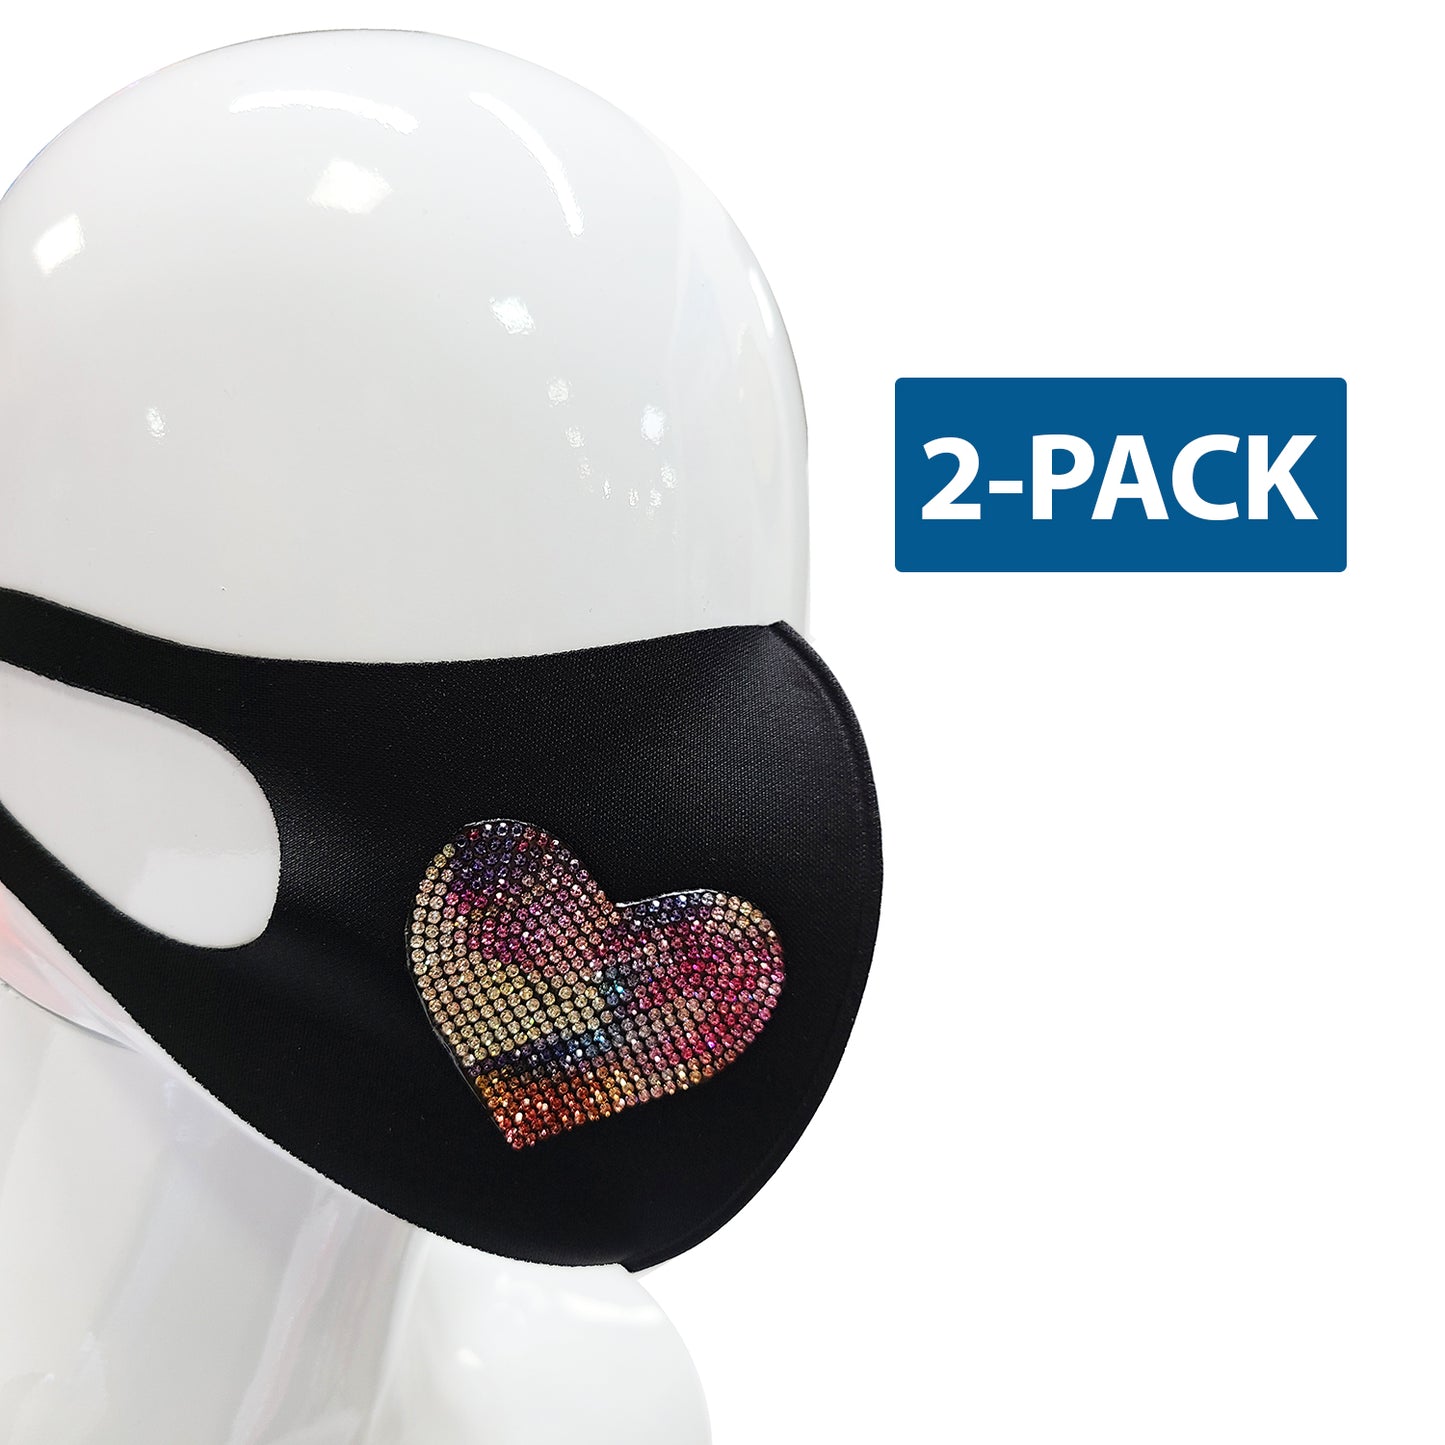 Reusable Fashion Face Mask high Quality Cotton Black Multi "2-PACK"